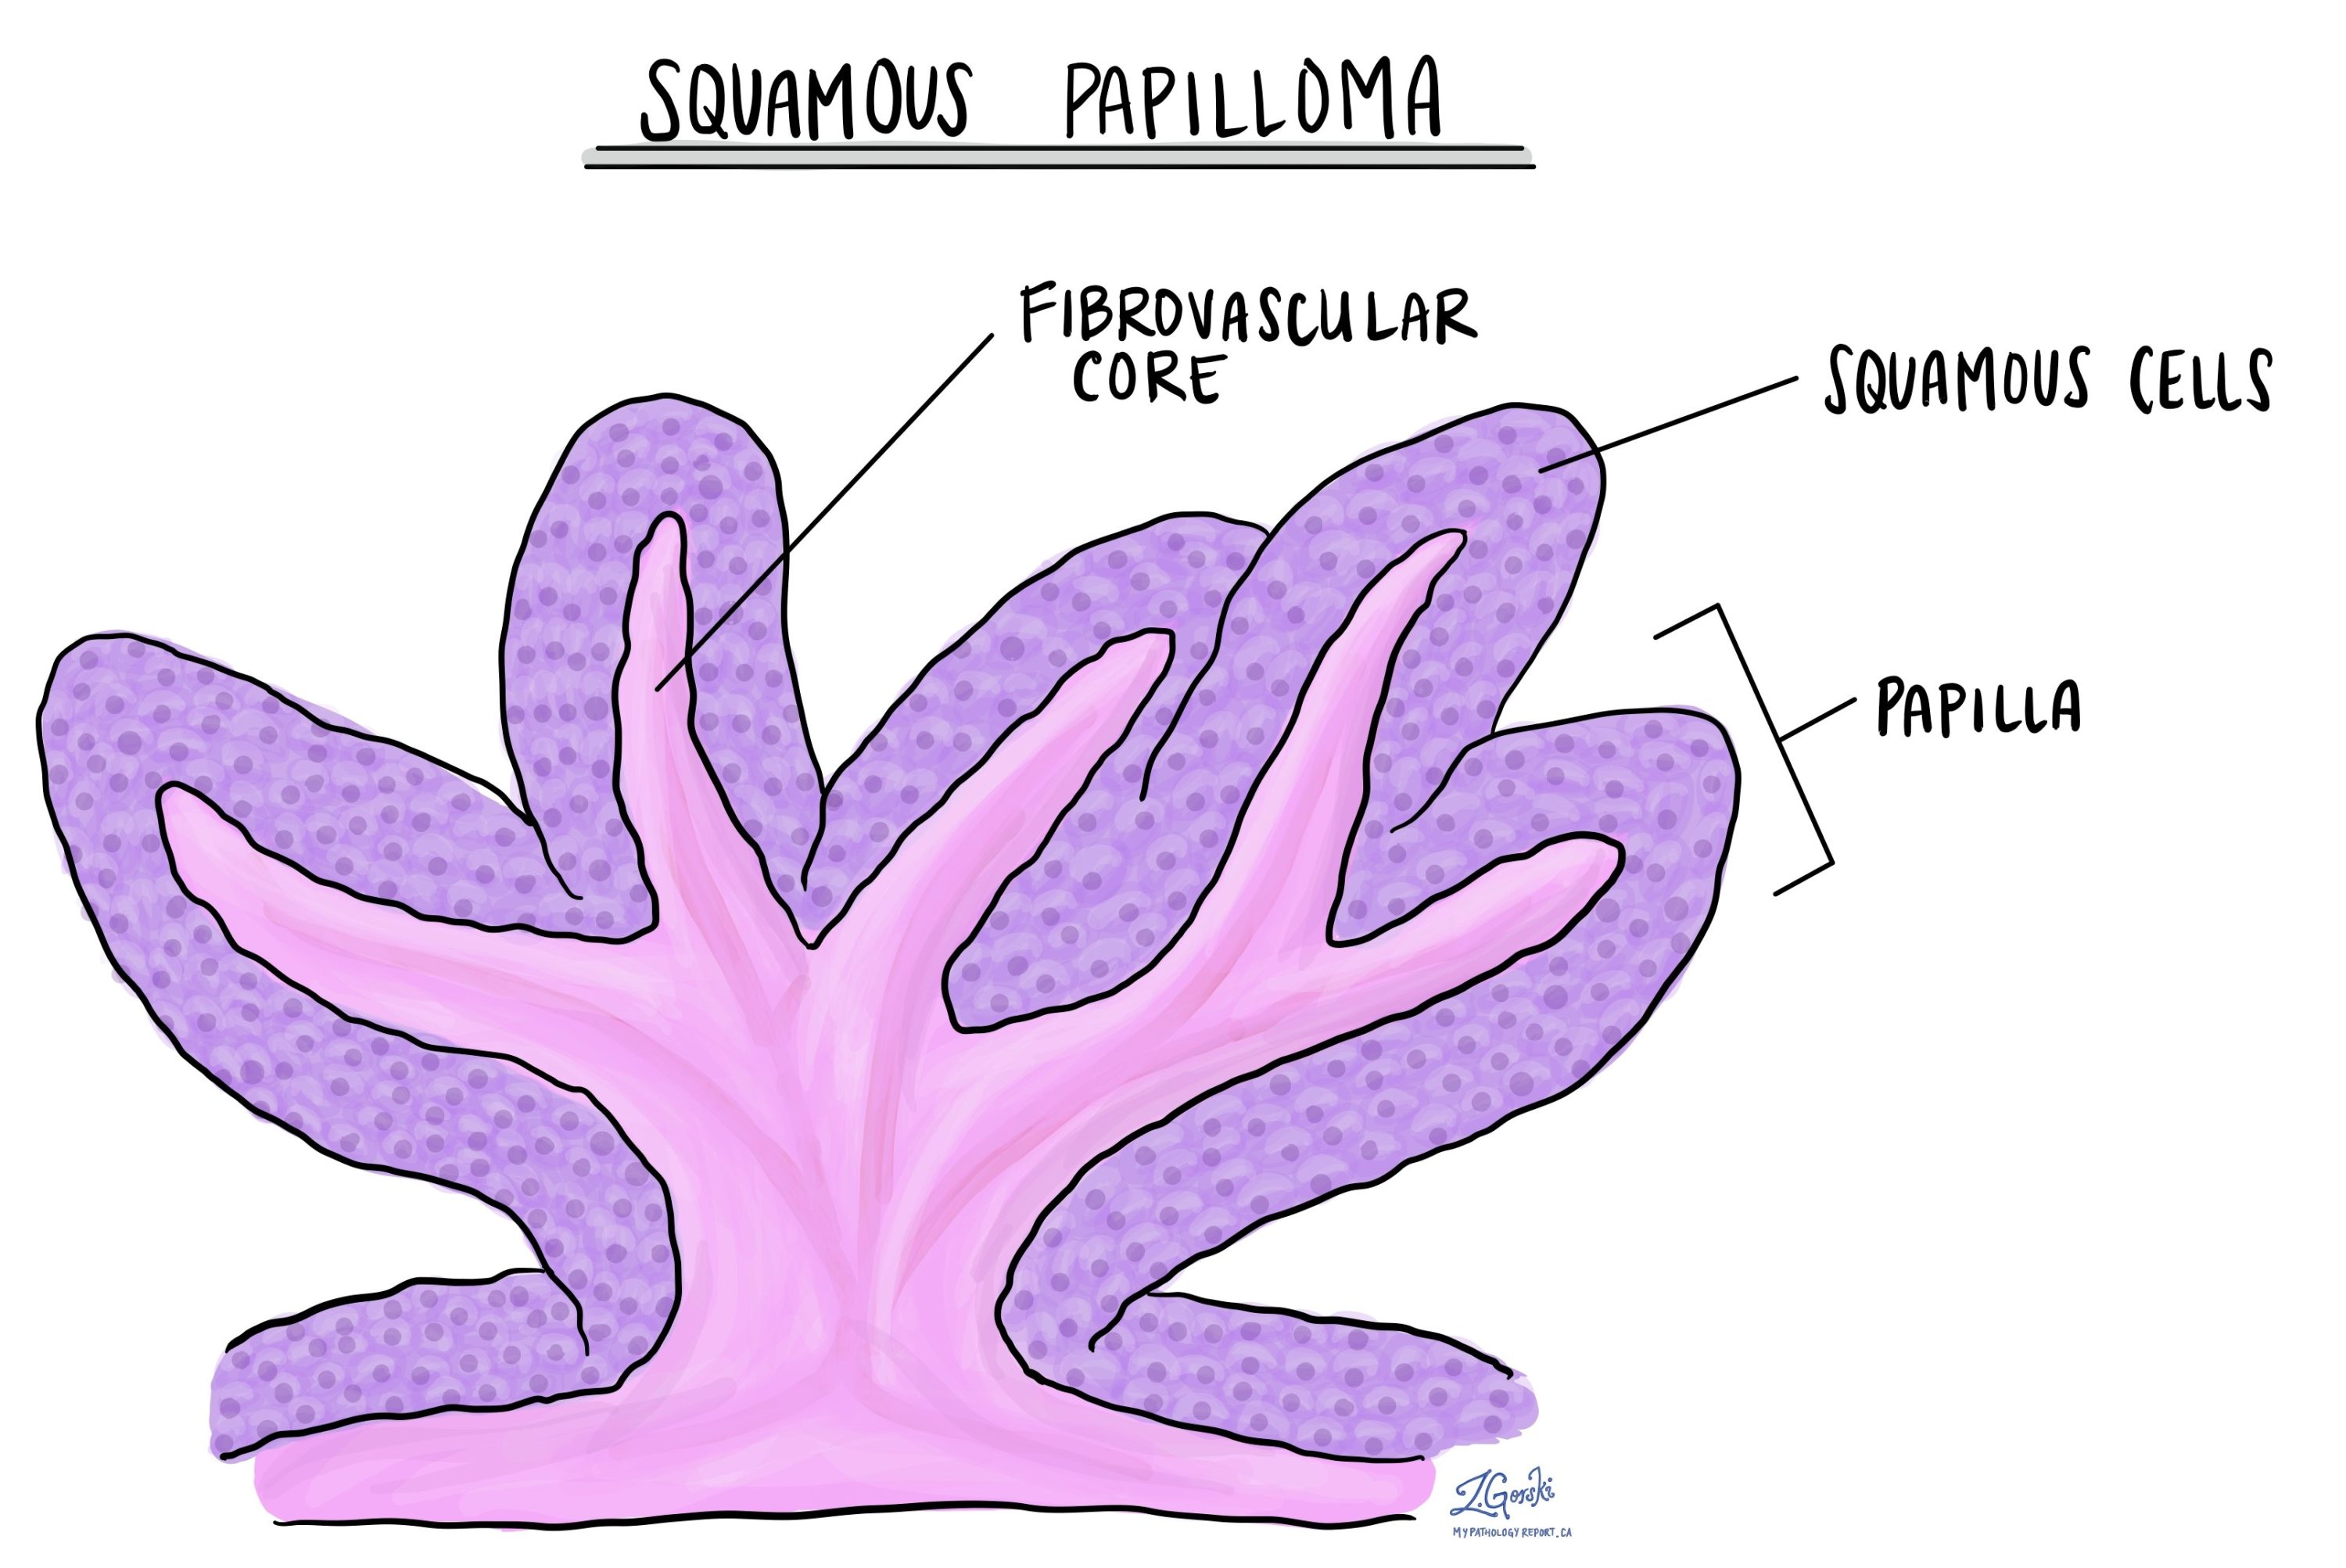 squamous papilloma on tongue treatment)